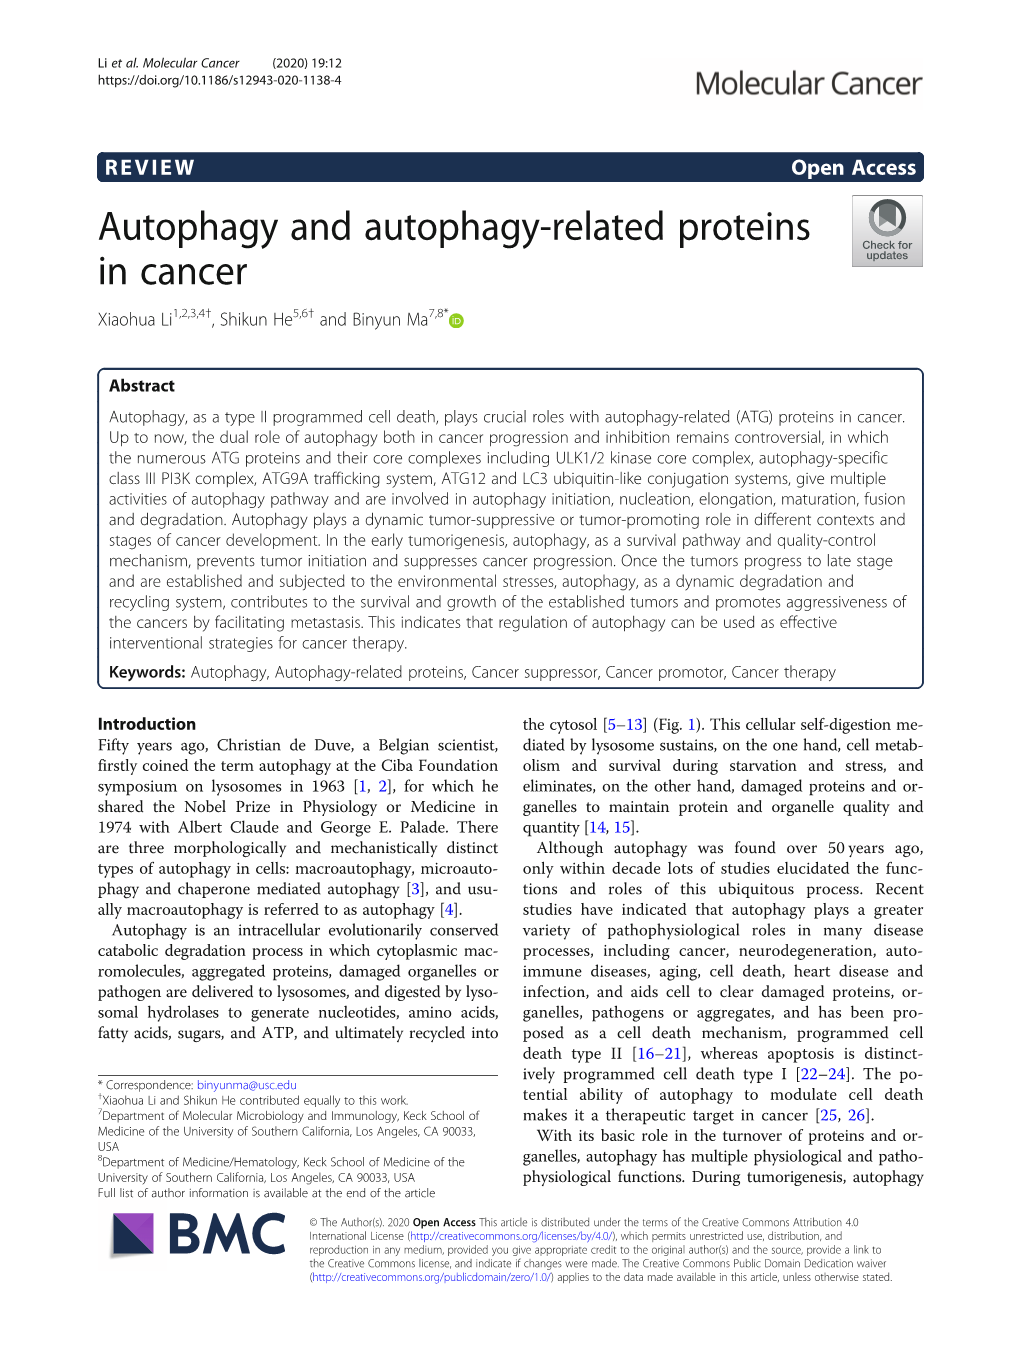 Autophagy and Autophagy-Related Proteins in Cancer Xiaohua Li1,2,3,4†, Shikun He5,6† and Binyun Ma7,8*